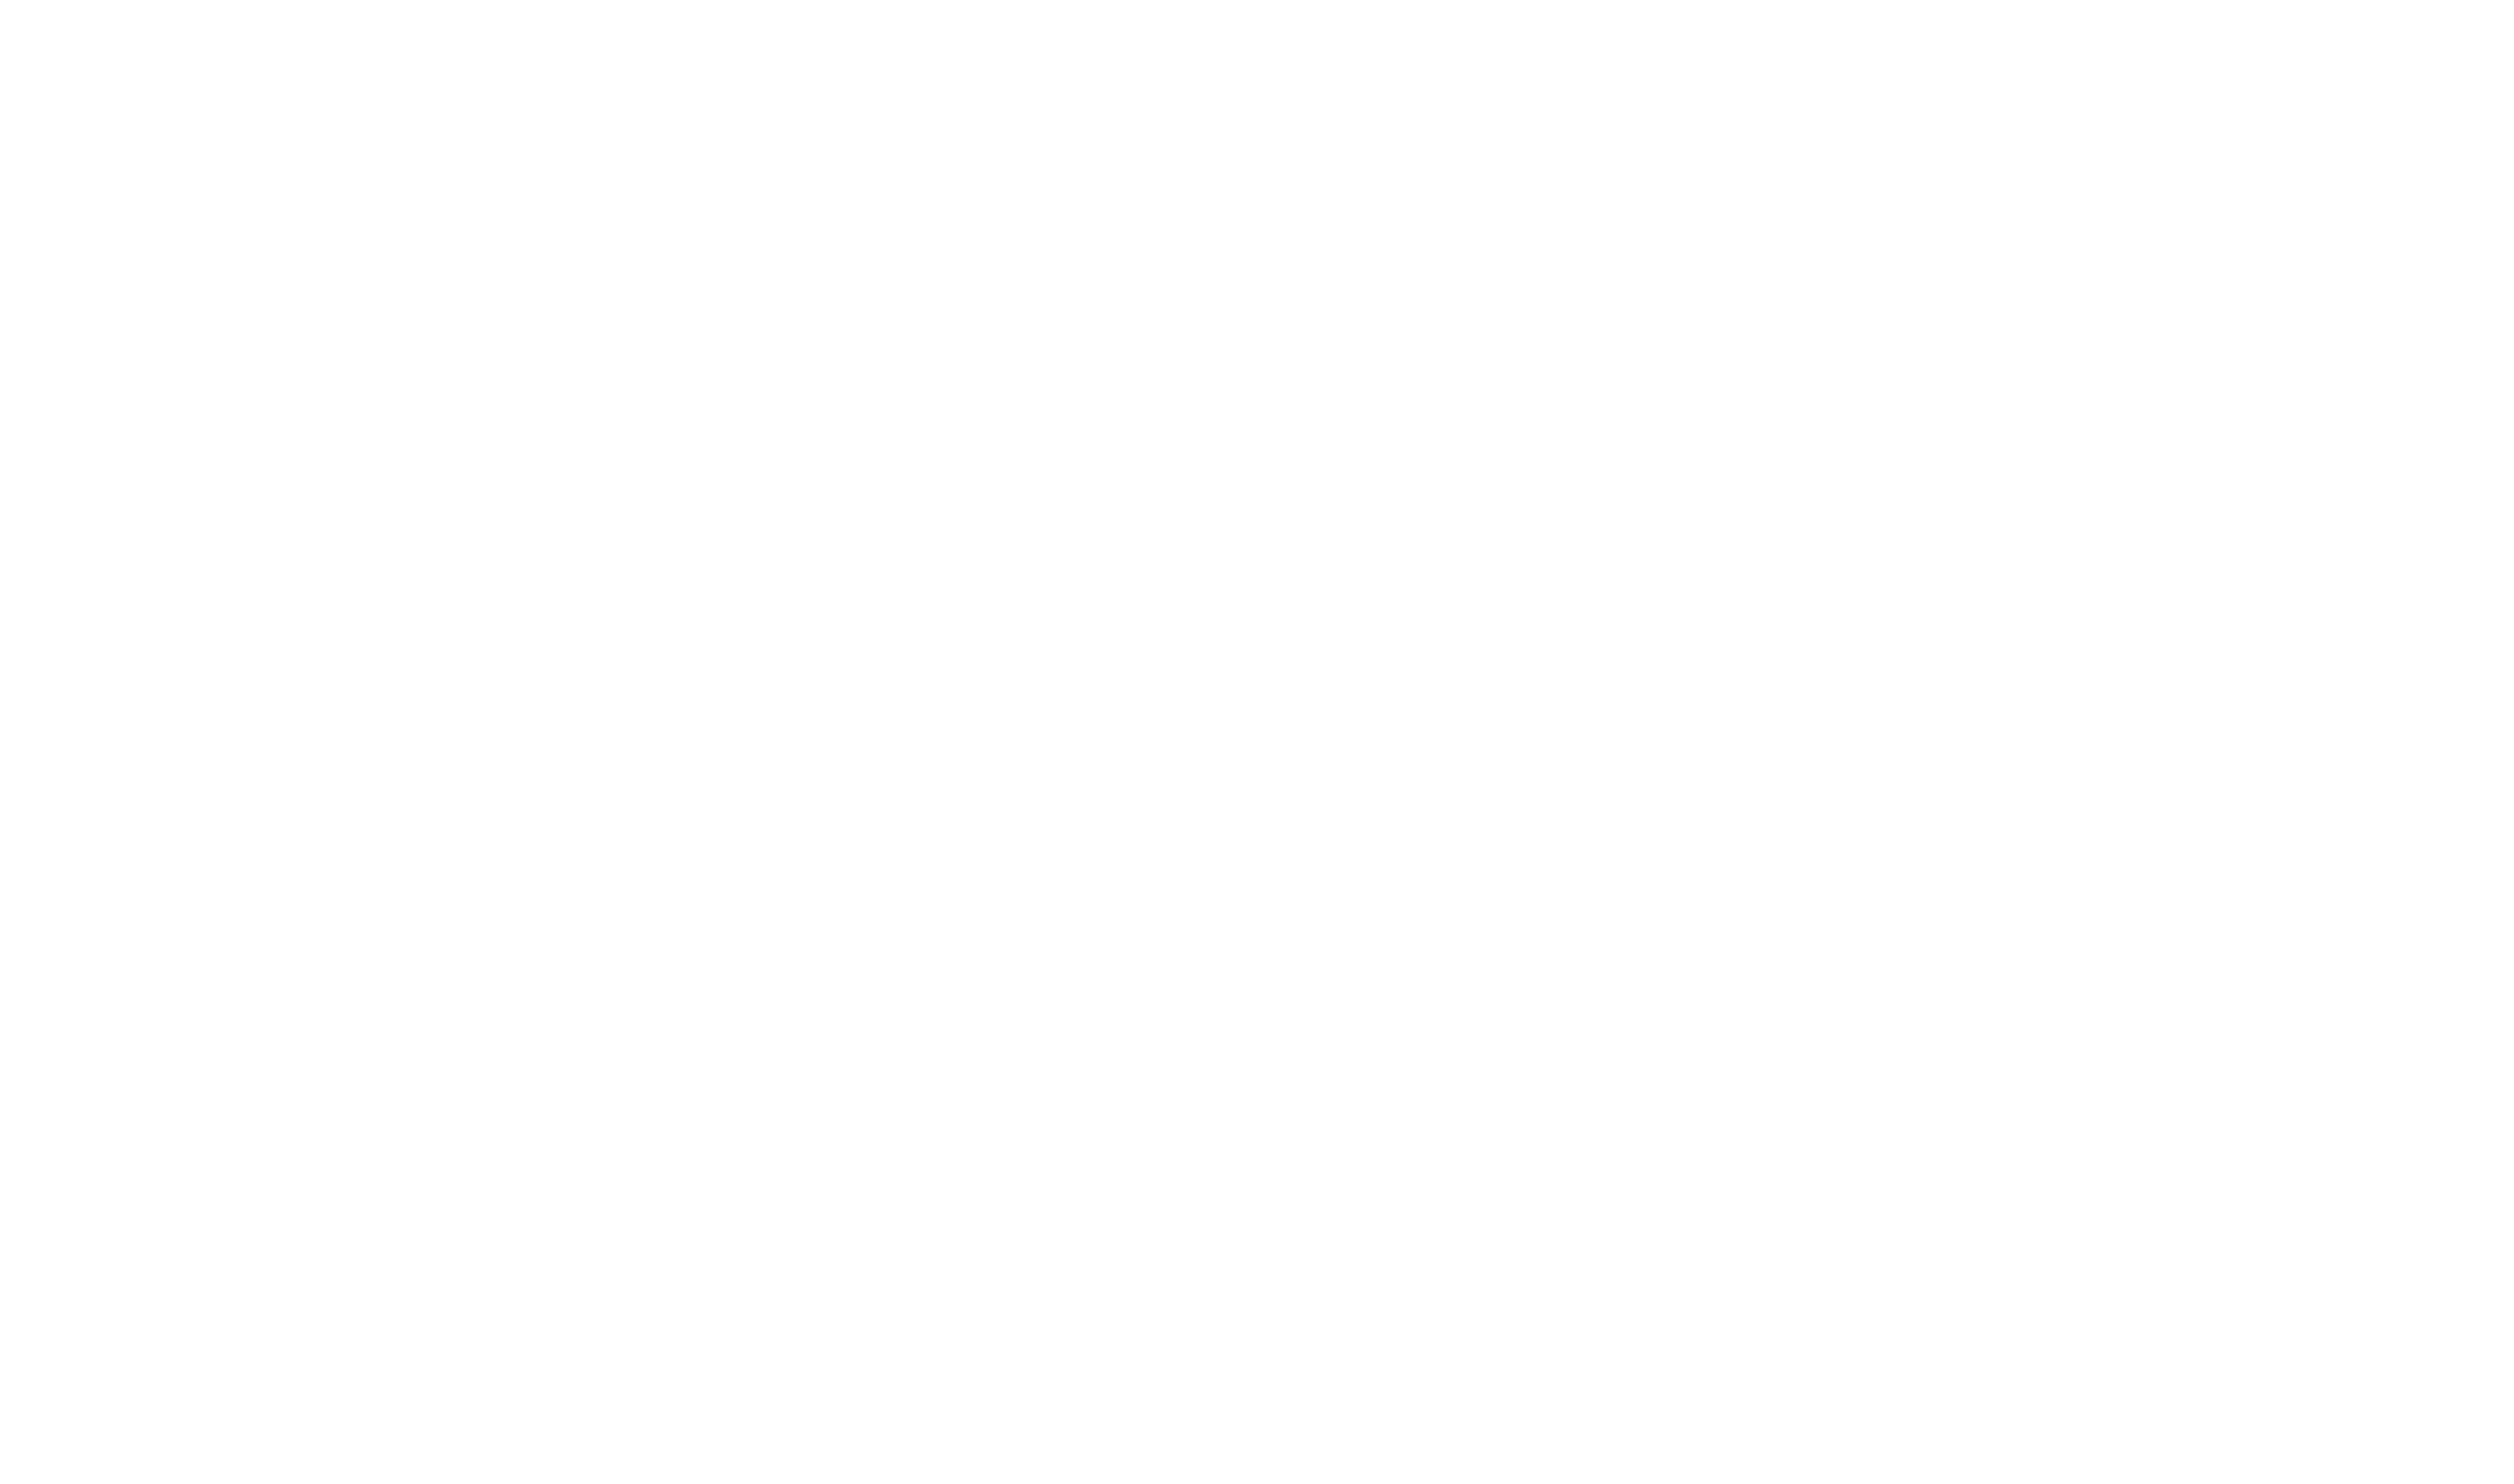 OWL Boot